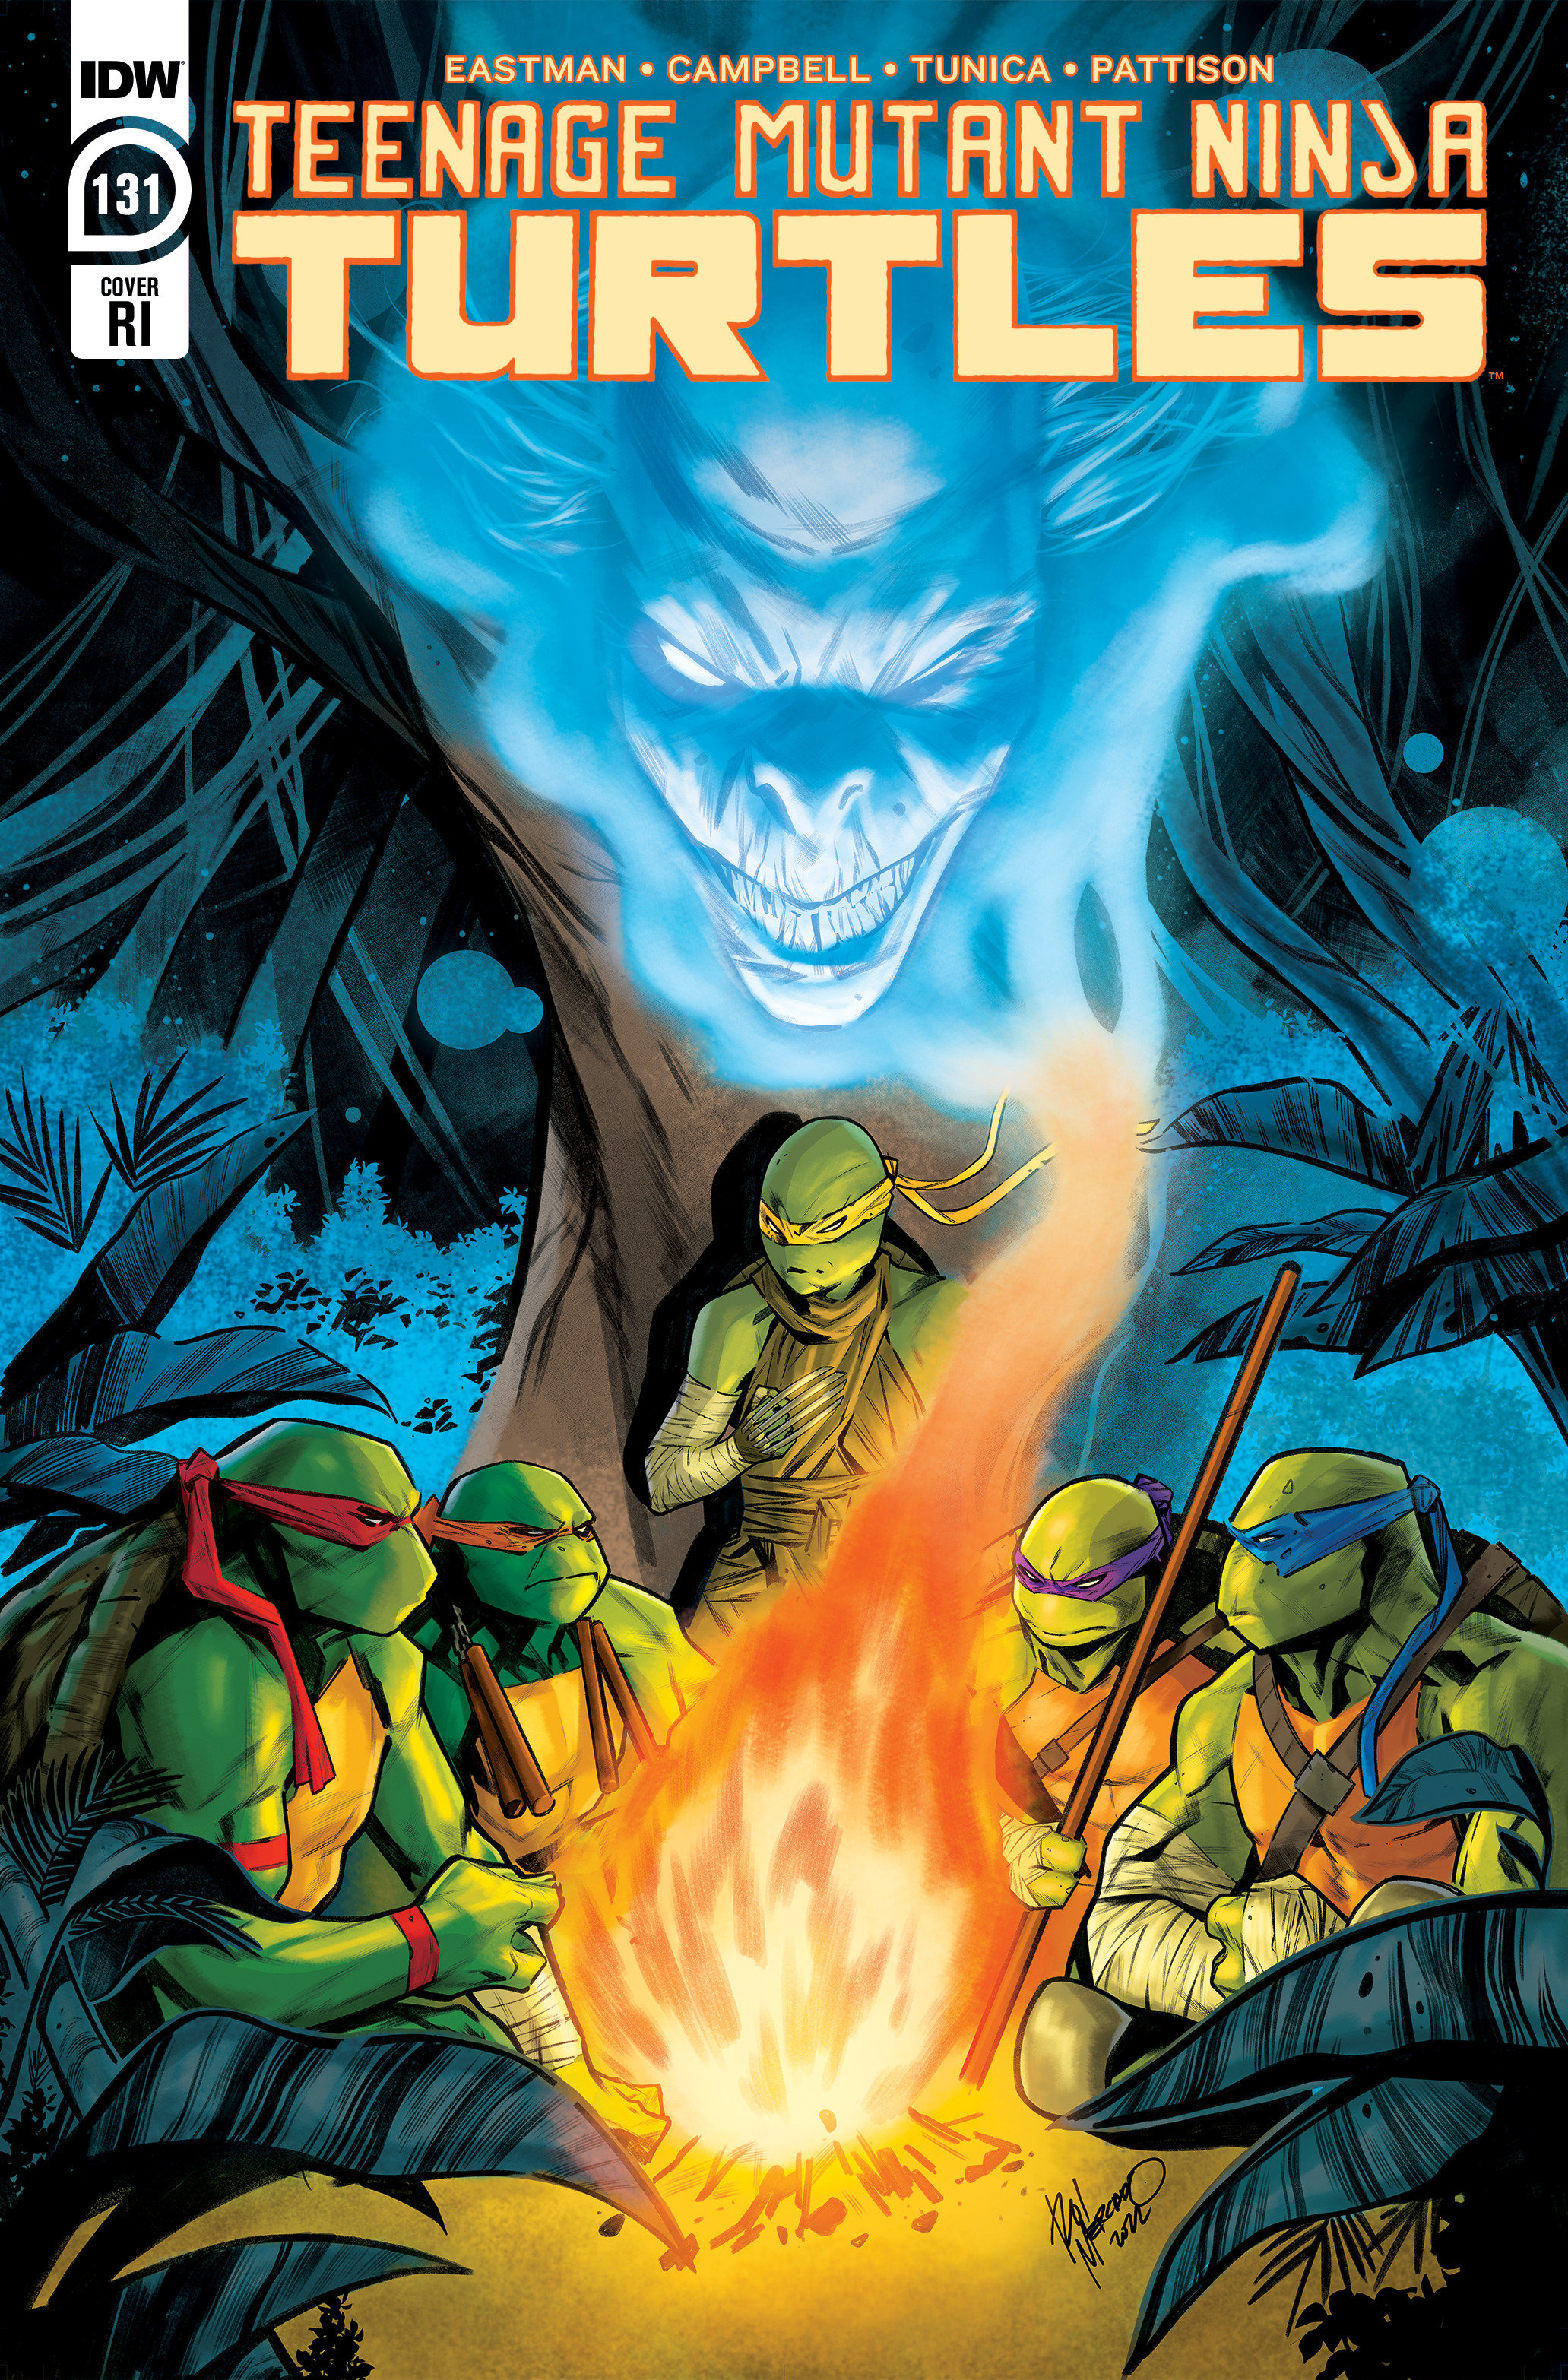 Teenage Mutant Ninja Turtles Ongoing #131 Cover Retailer Incentive Mercado 1 For 10 Variant (2011)